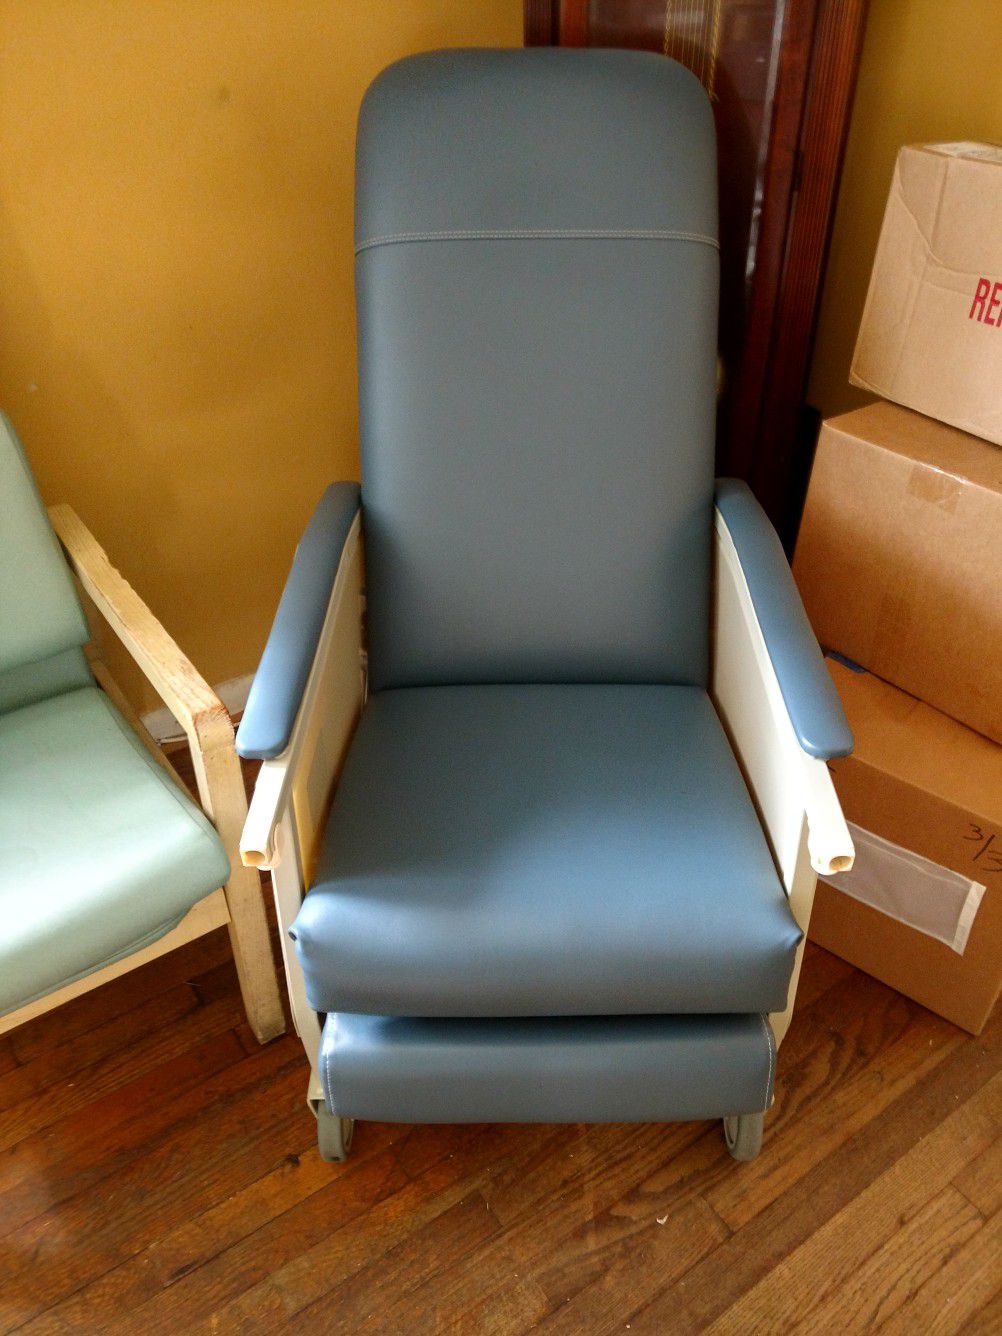 Geriatric chair